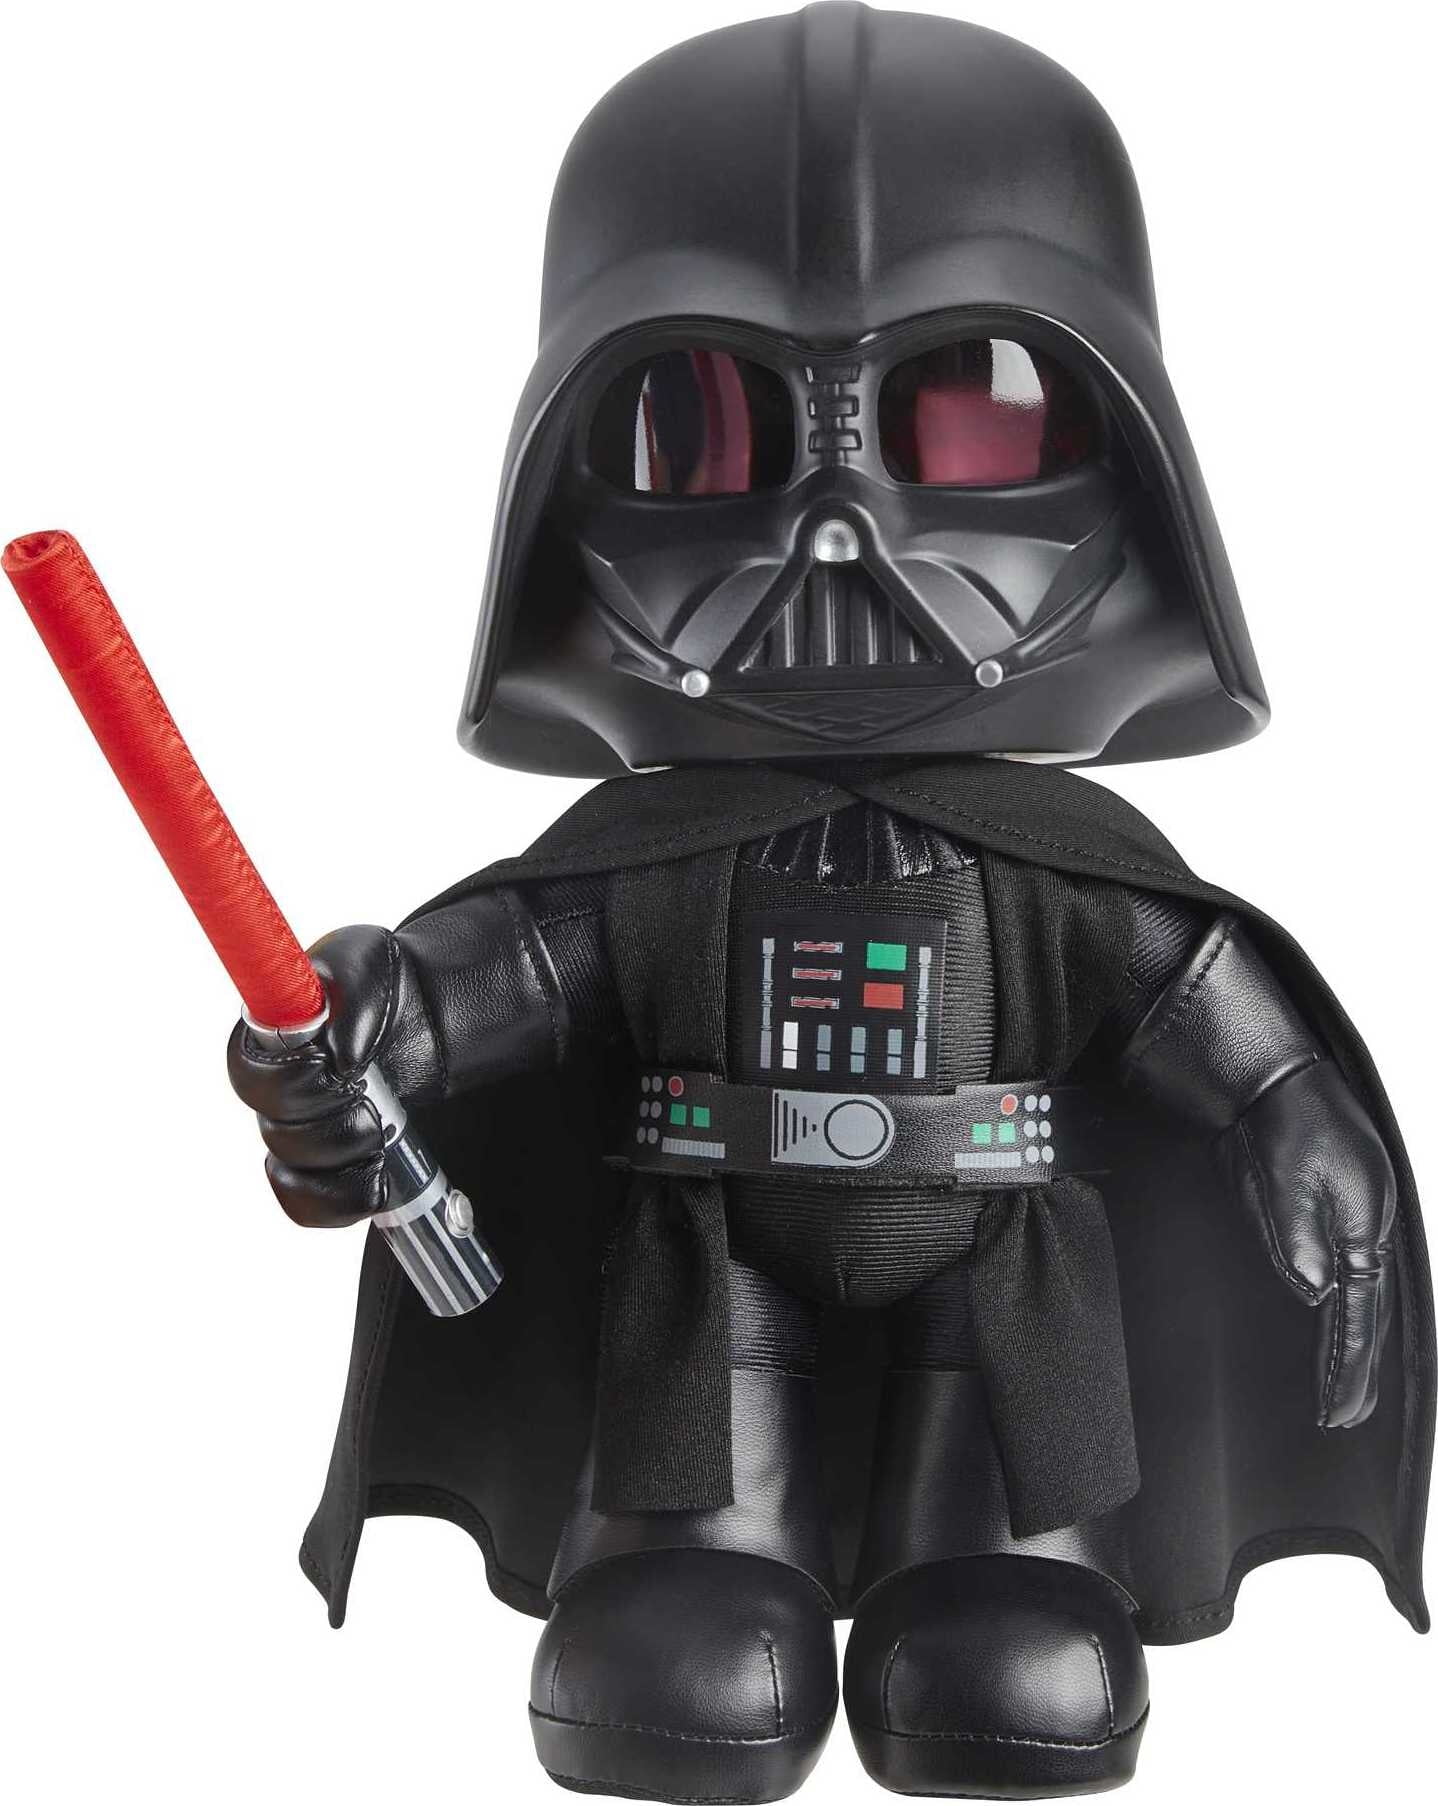 Star Wars Obi-Wan Kenobi Darth Vader Plush Toy with Voice Changer & Light-Up Weapon (11-inch)